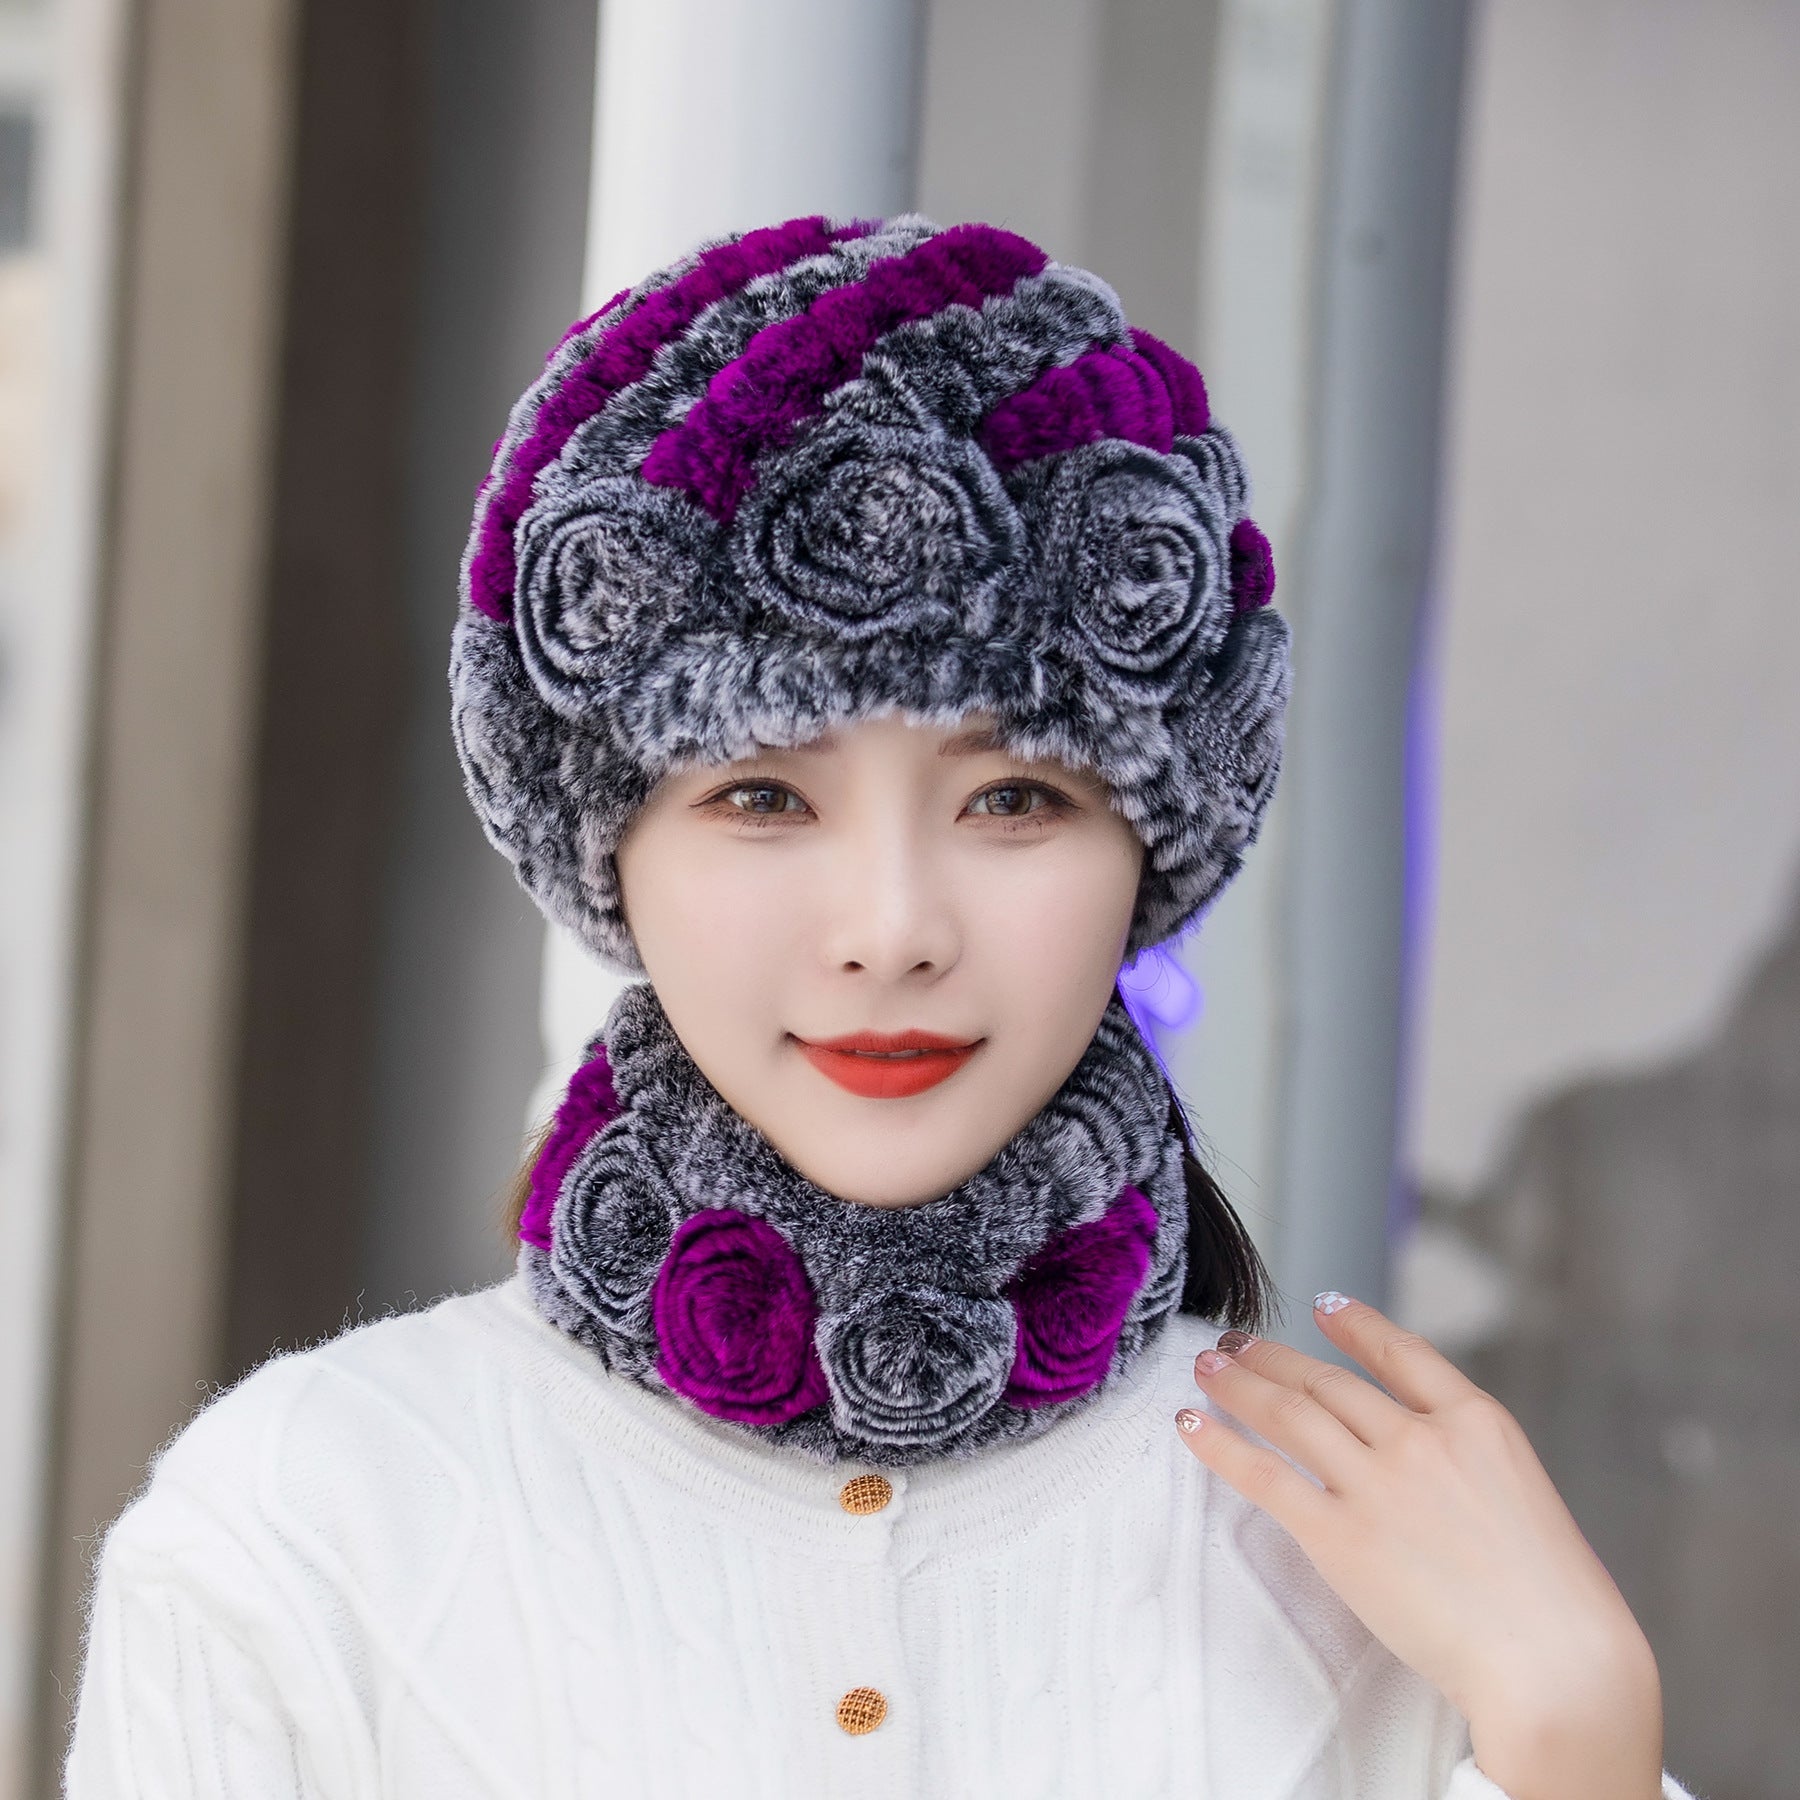 HOOR Winter Warm Fur Hat Scarf Black Cream Purple Hat And Scarf Free Size